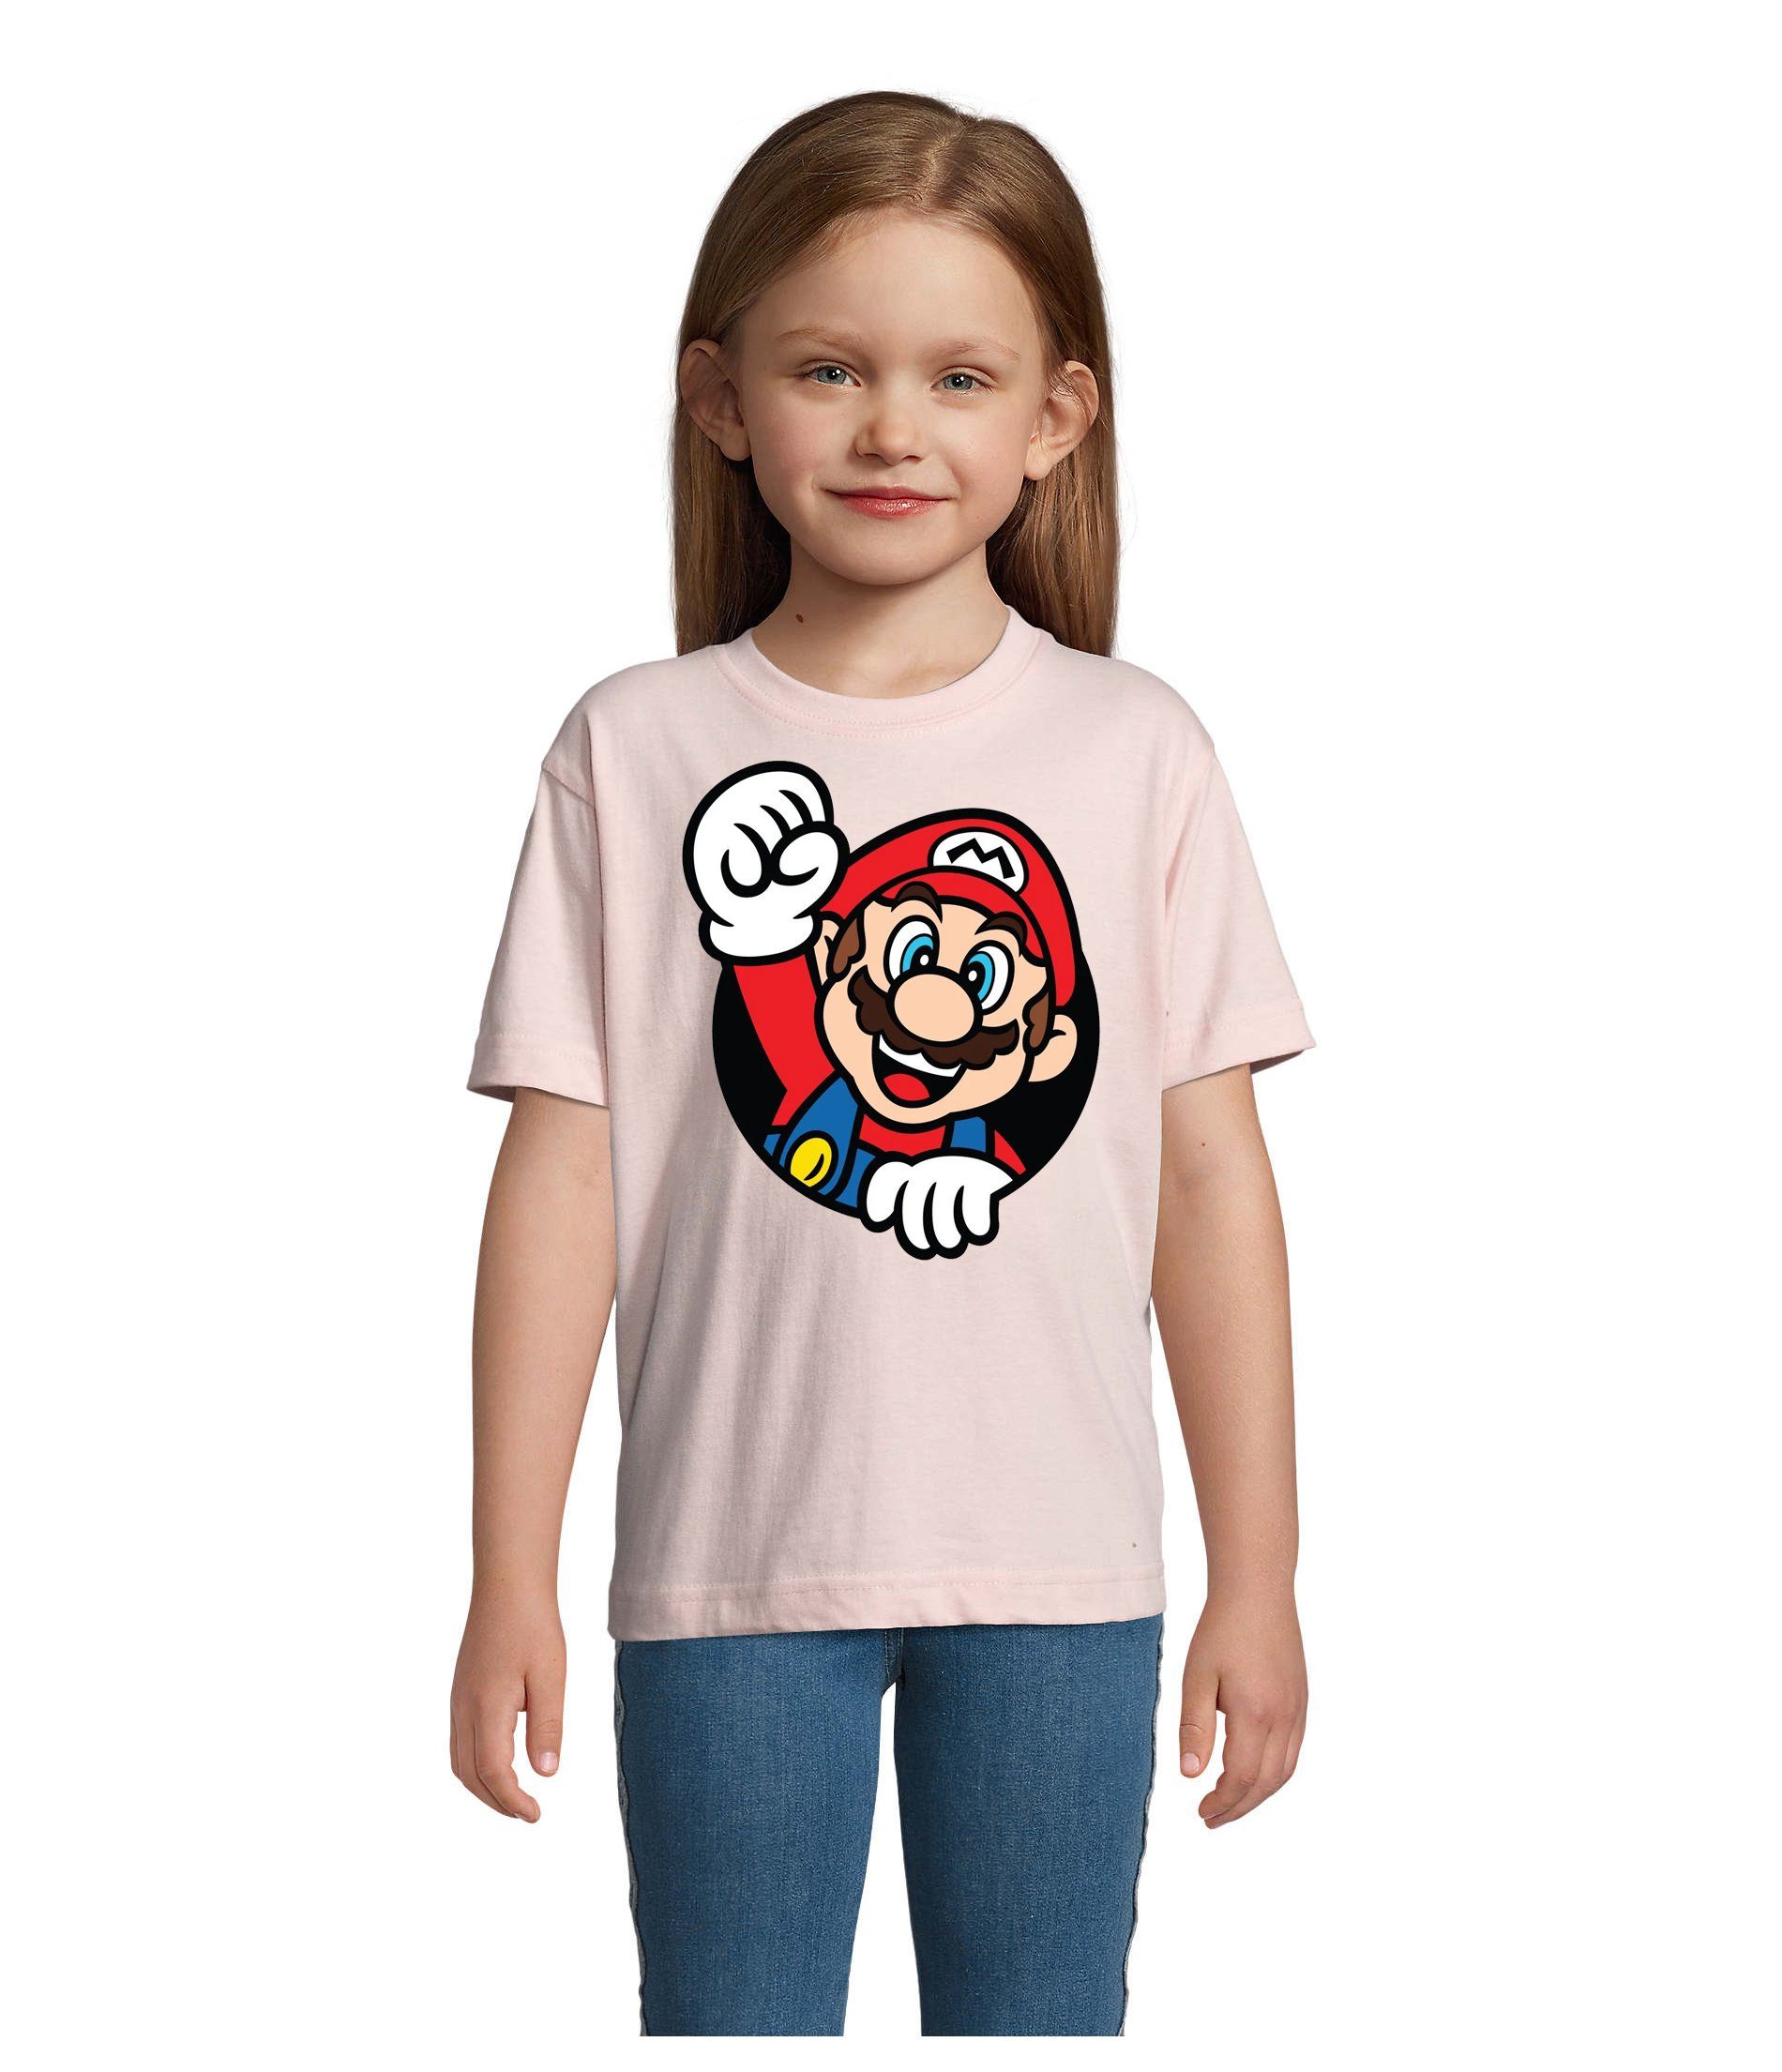 Blondie & Gaming Super Nerd Konsole Faust Konsole T-Shirt Rosa Nintendo Mario Brownie Spiel Kinder